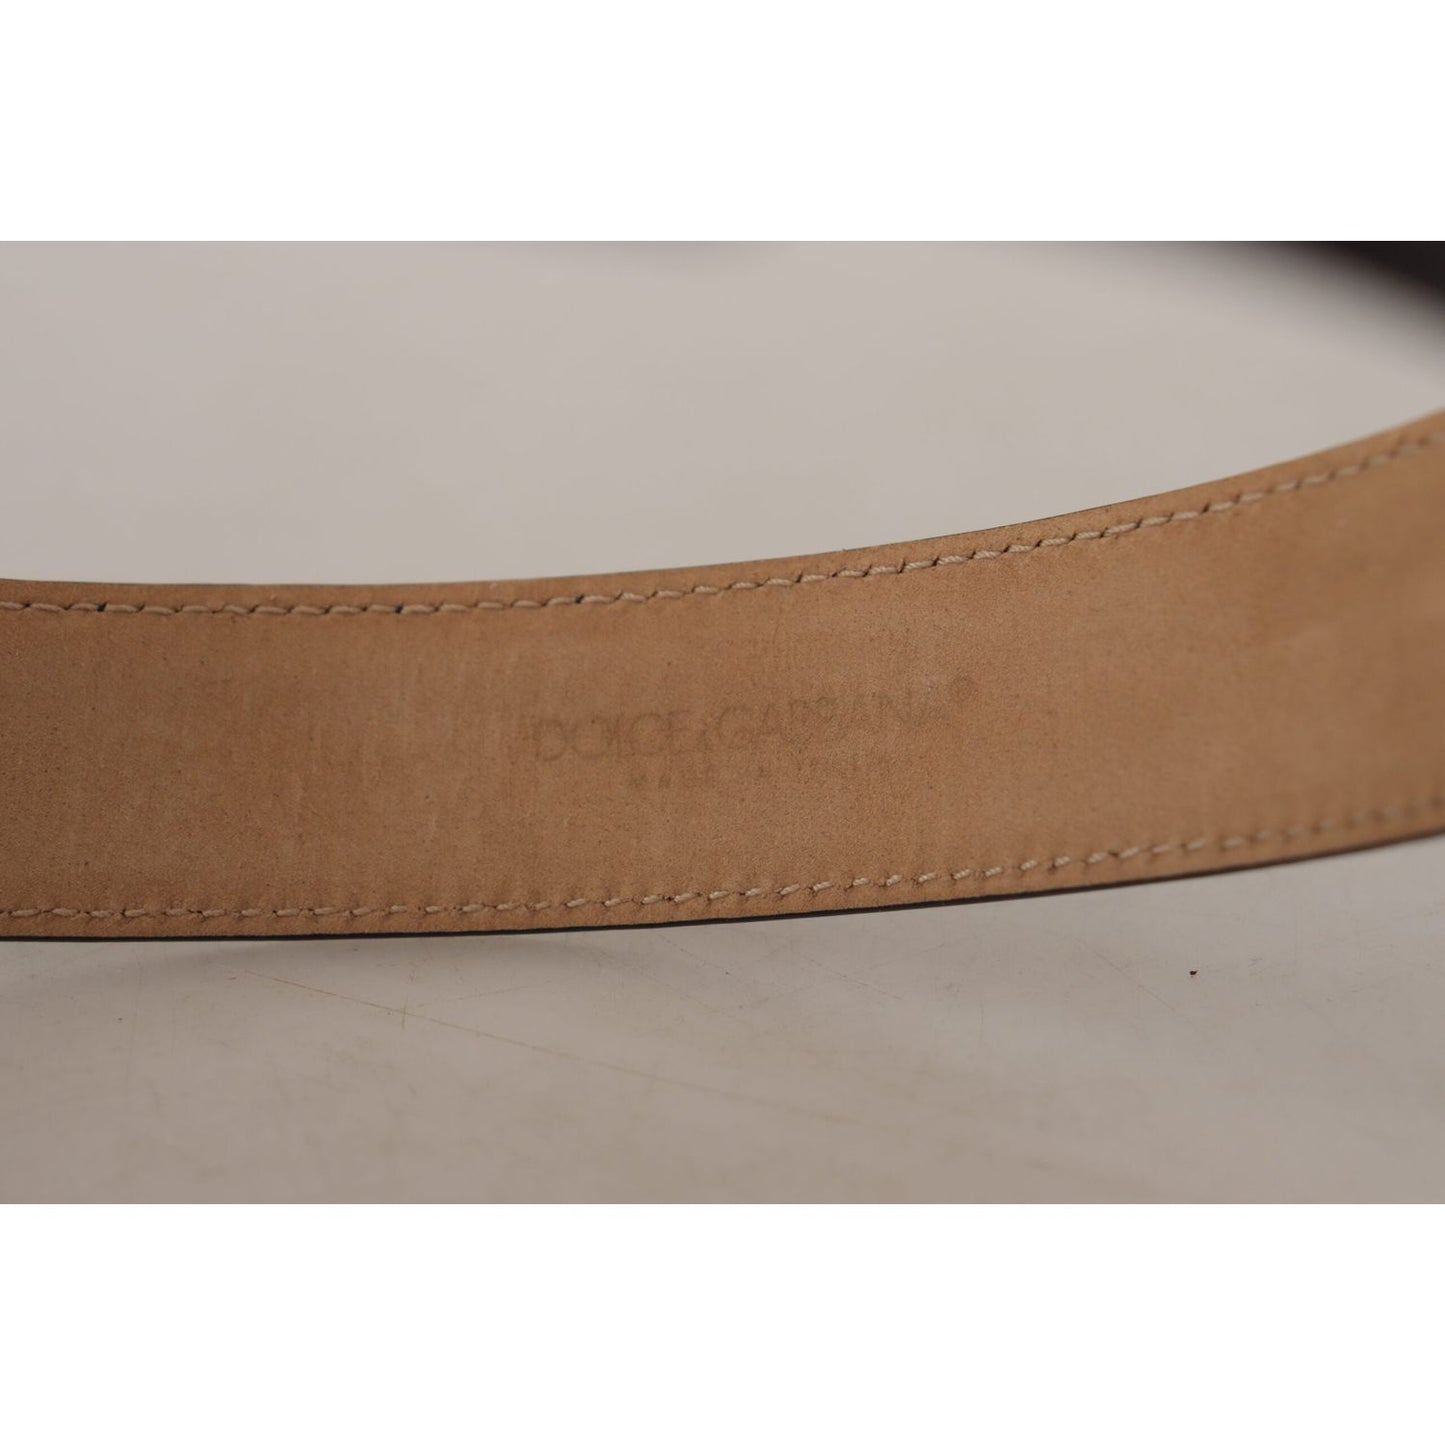 Dolce & Gabbana Elegant Leather Belt with Logo Buckle black-solid-leather-classic-gold-waist-buckle-belt